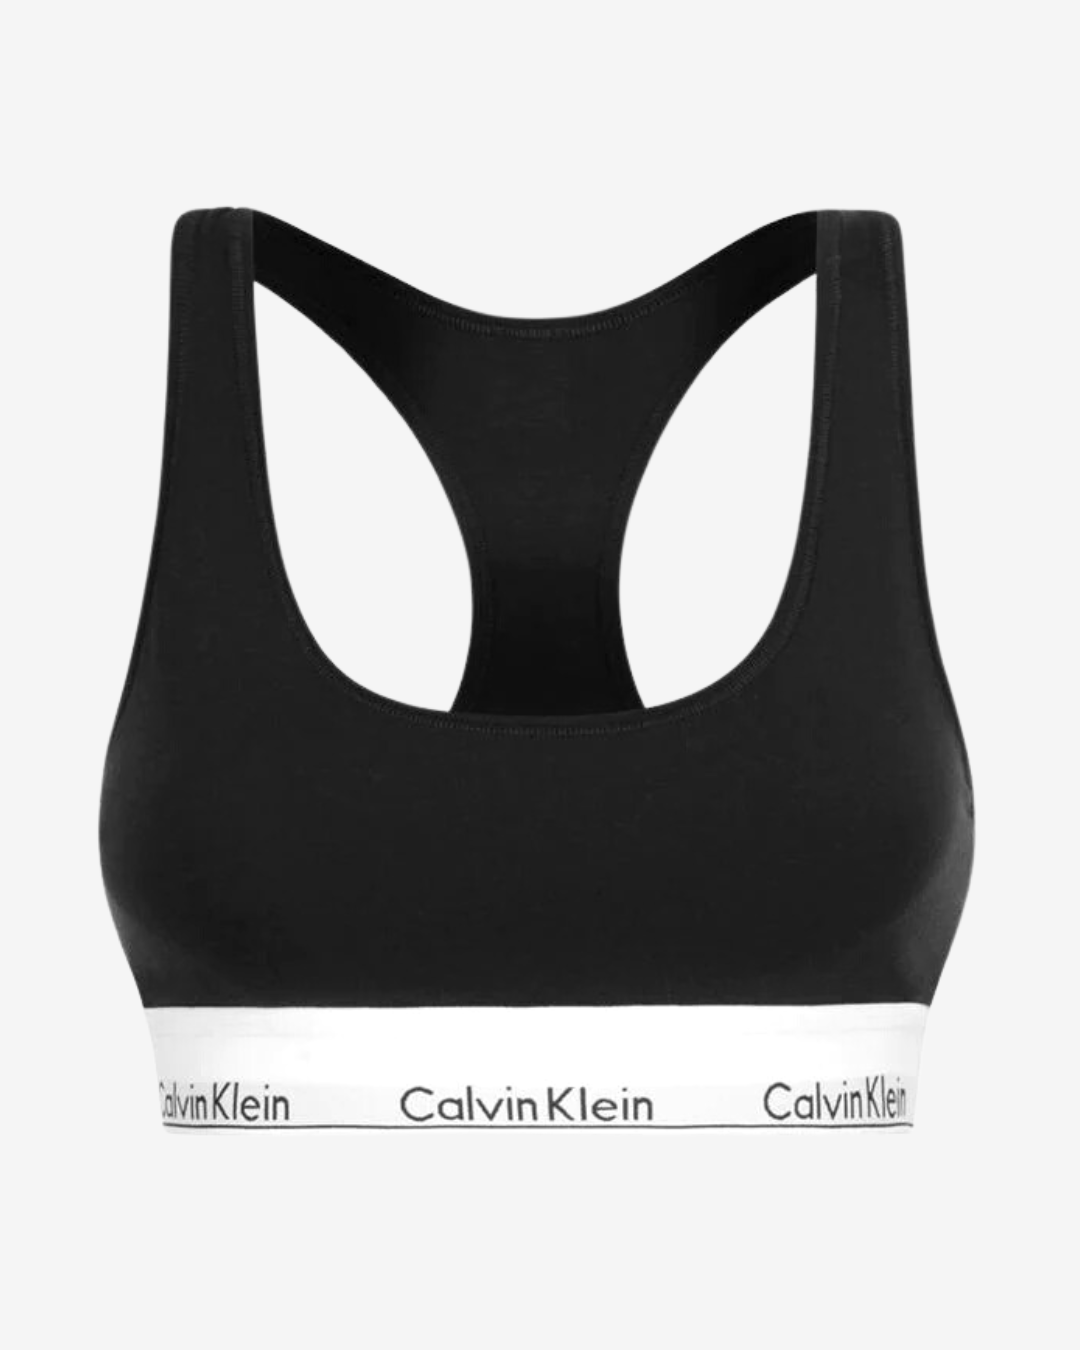 Se Calvin Klein Bralette bh - Sort - Str. L - Modish.dk hos Modish.dk